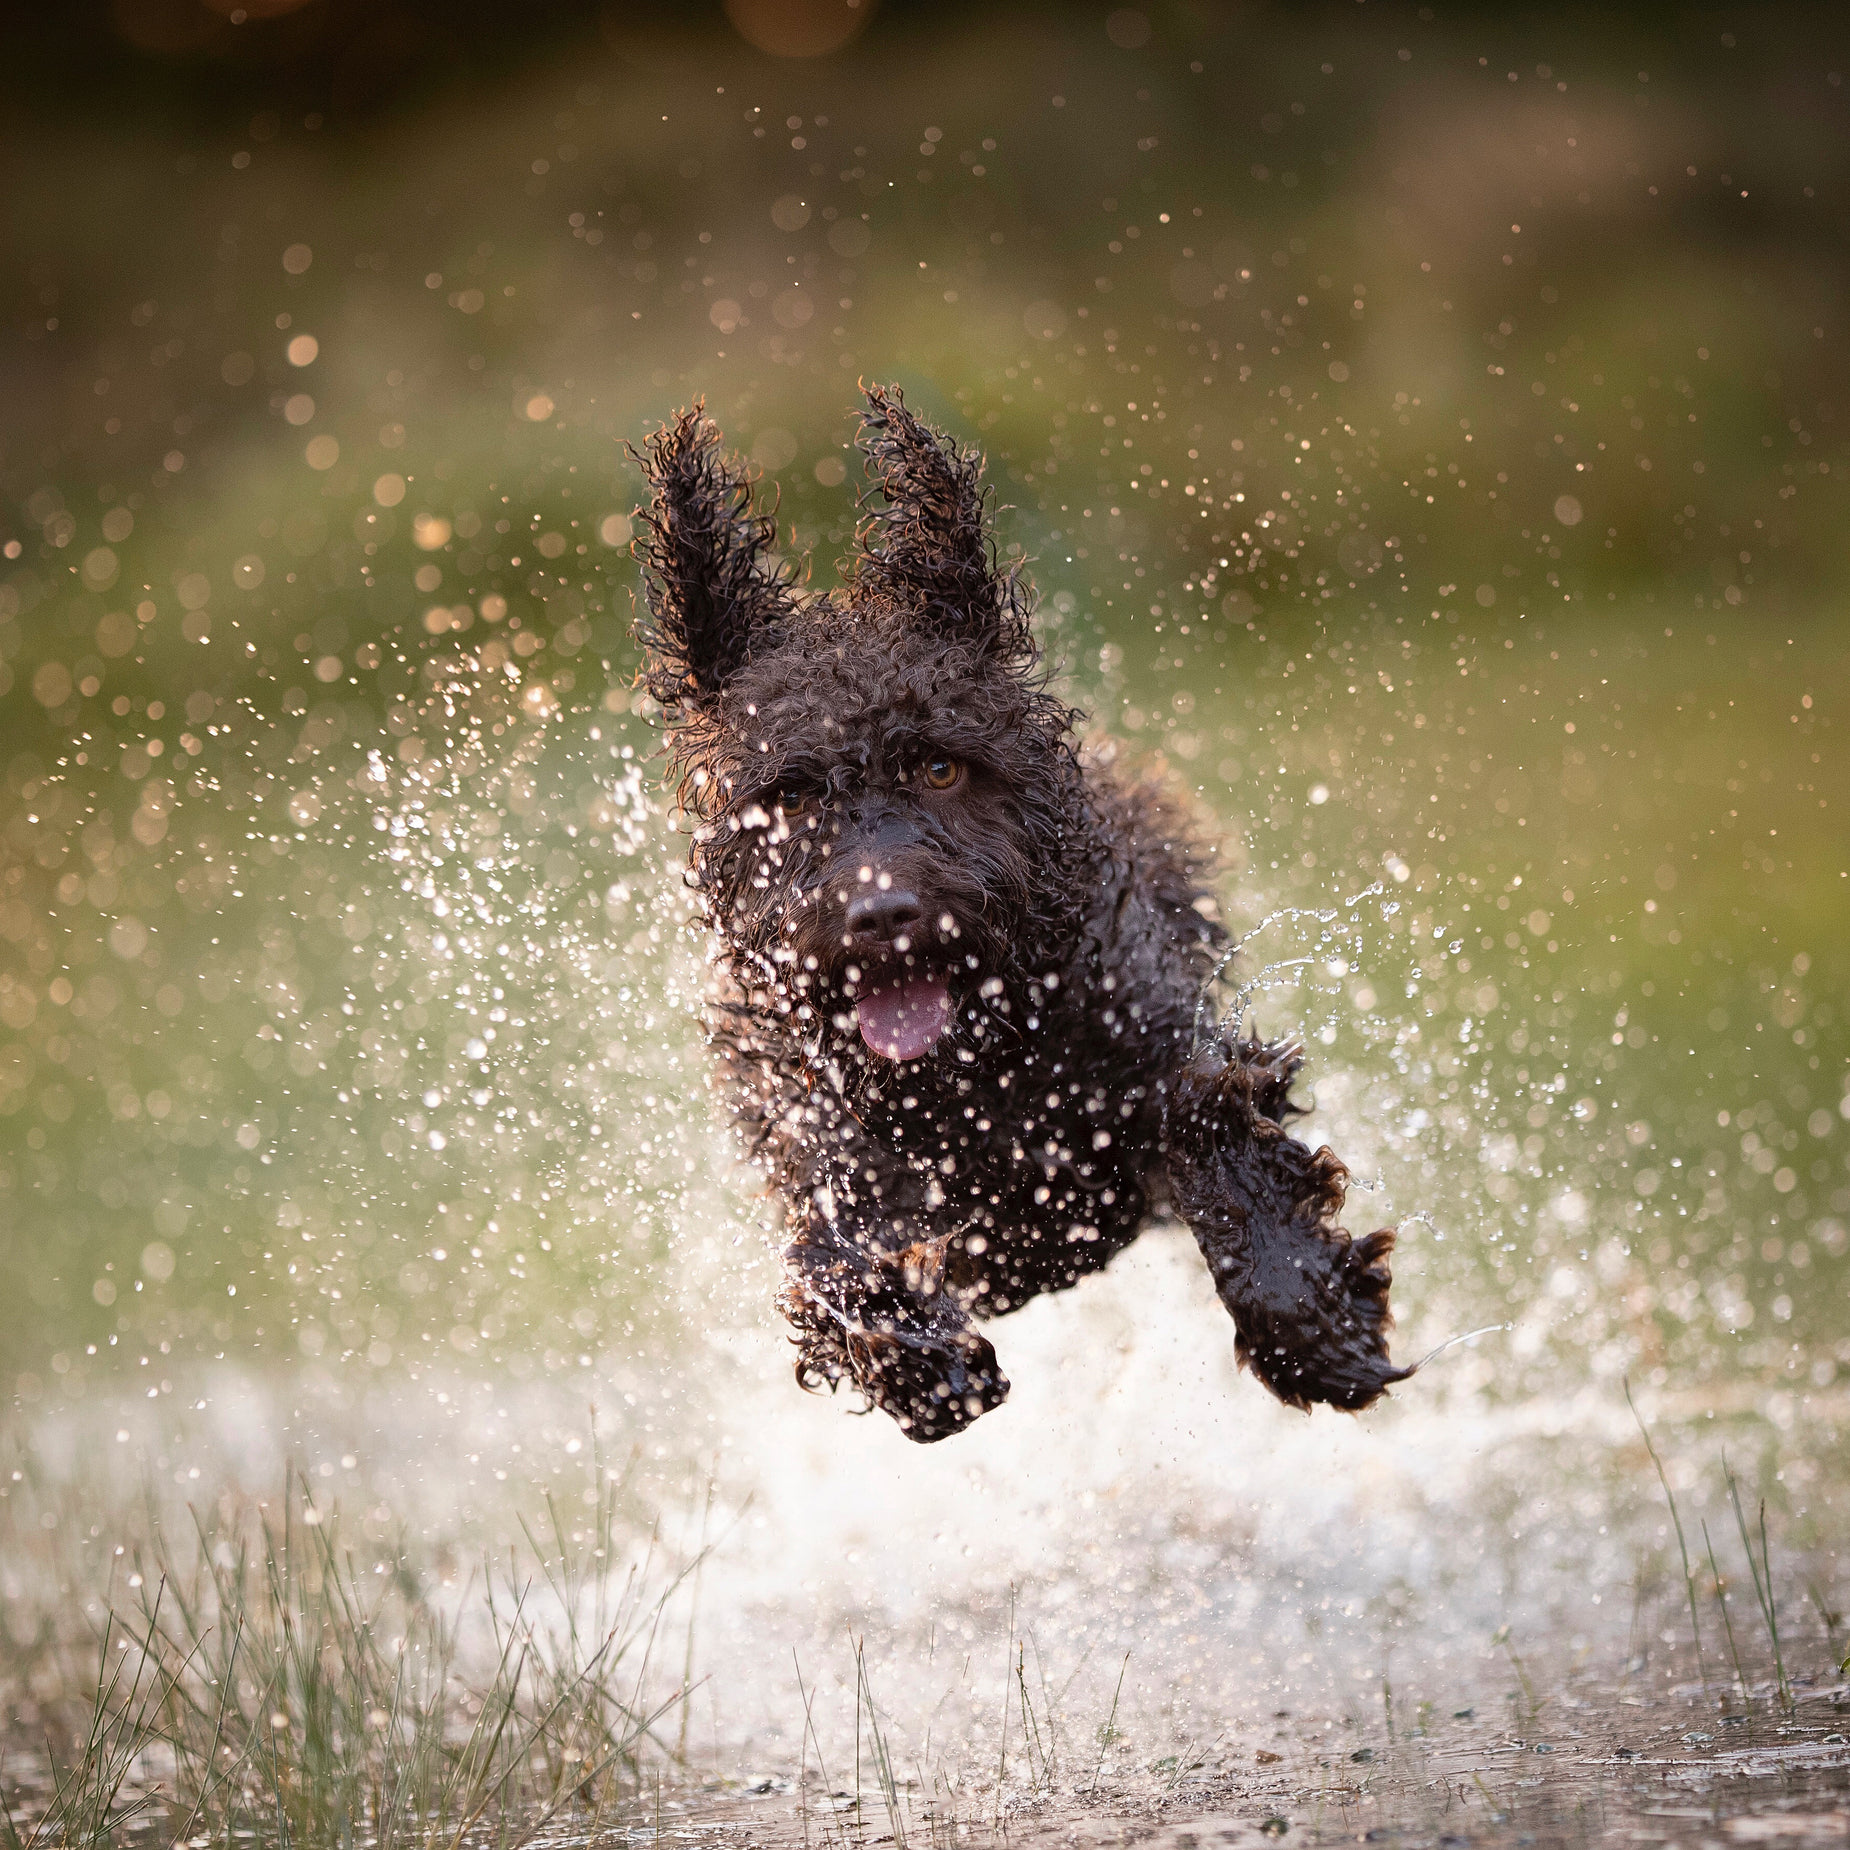 a black dog running through shallow water